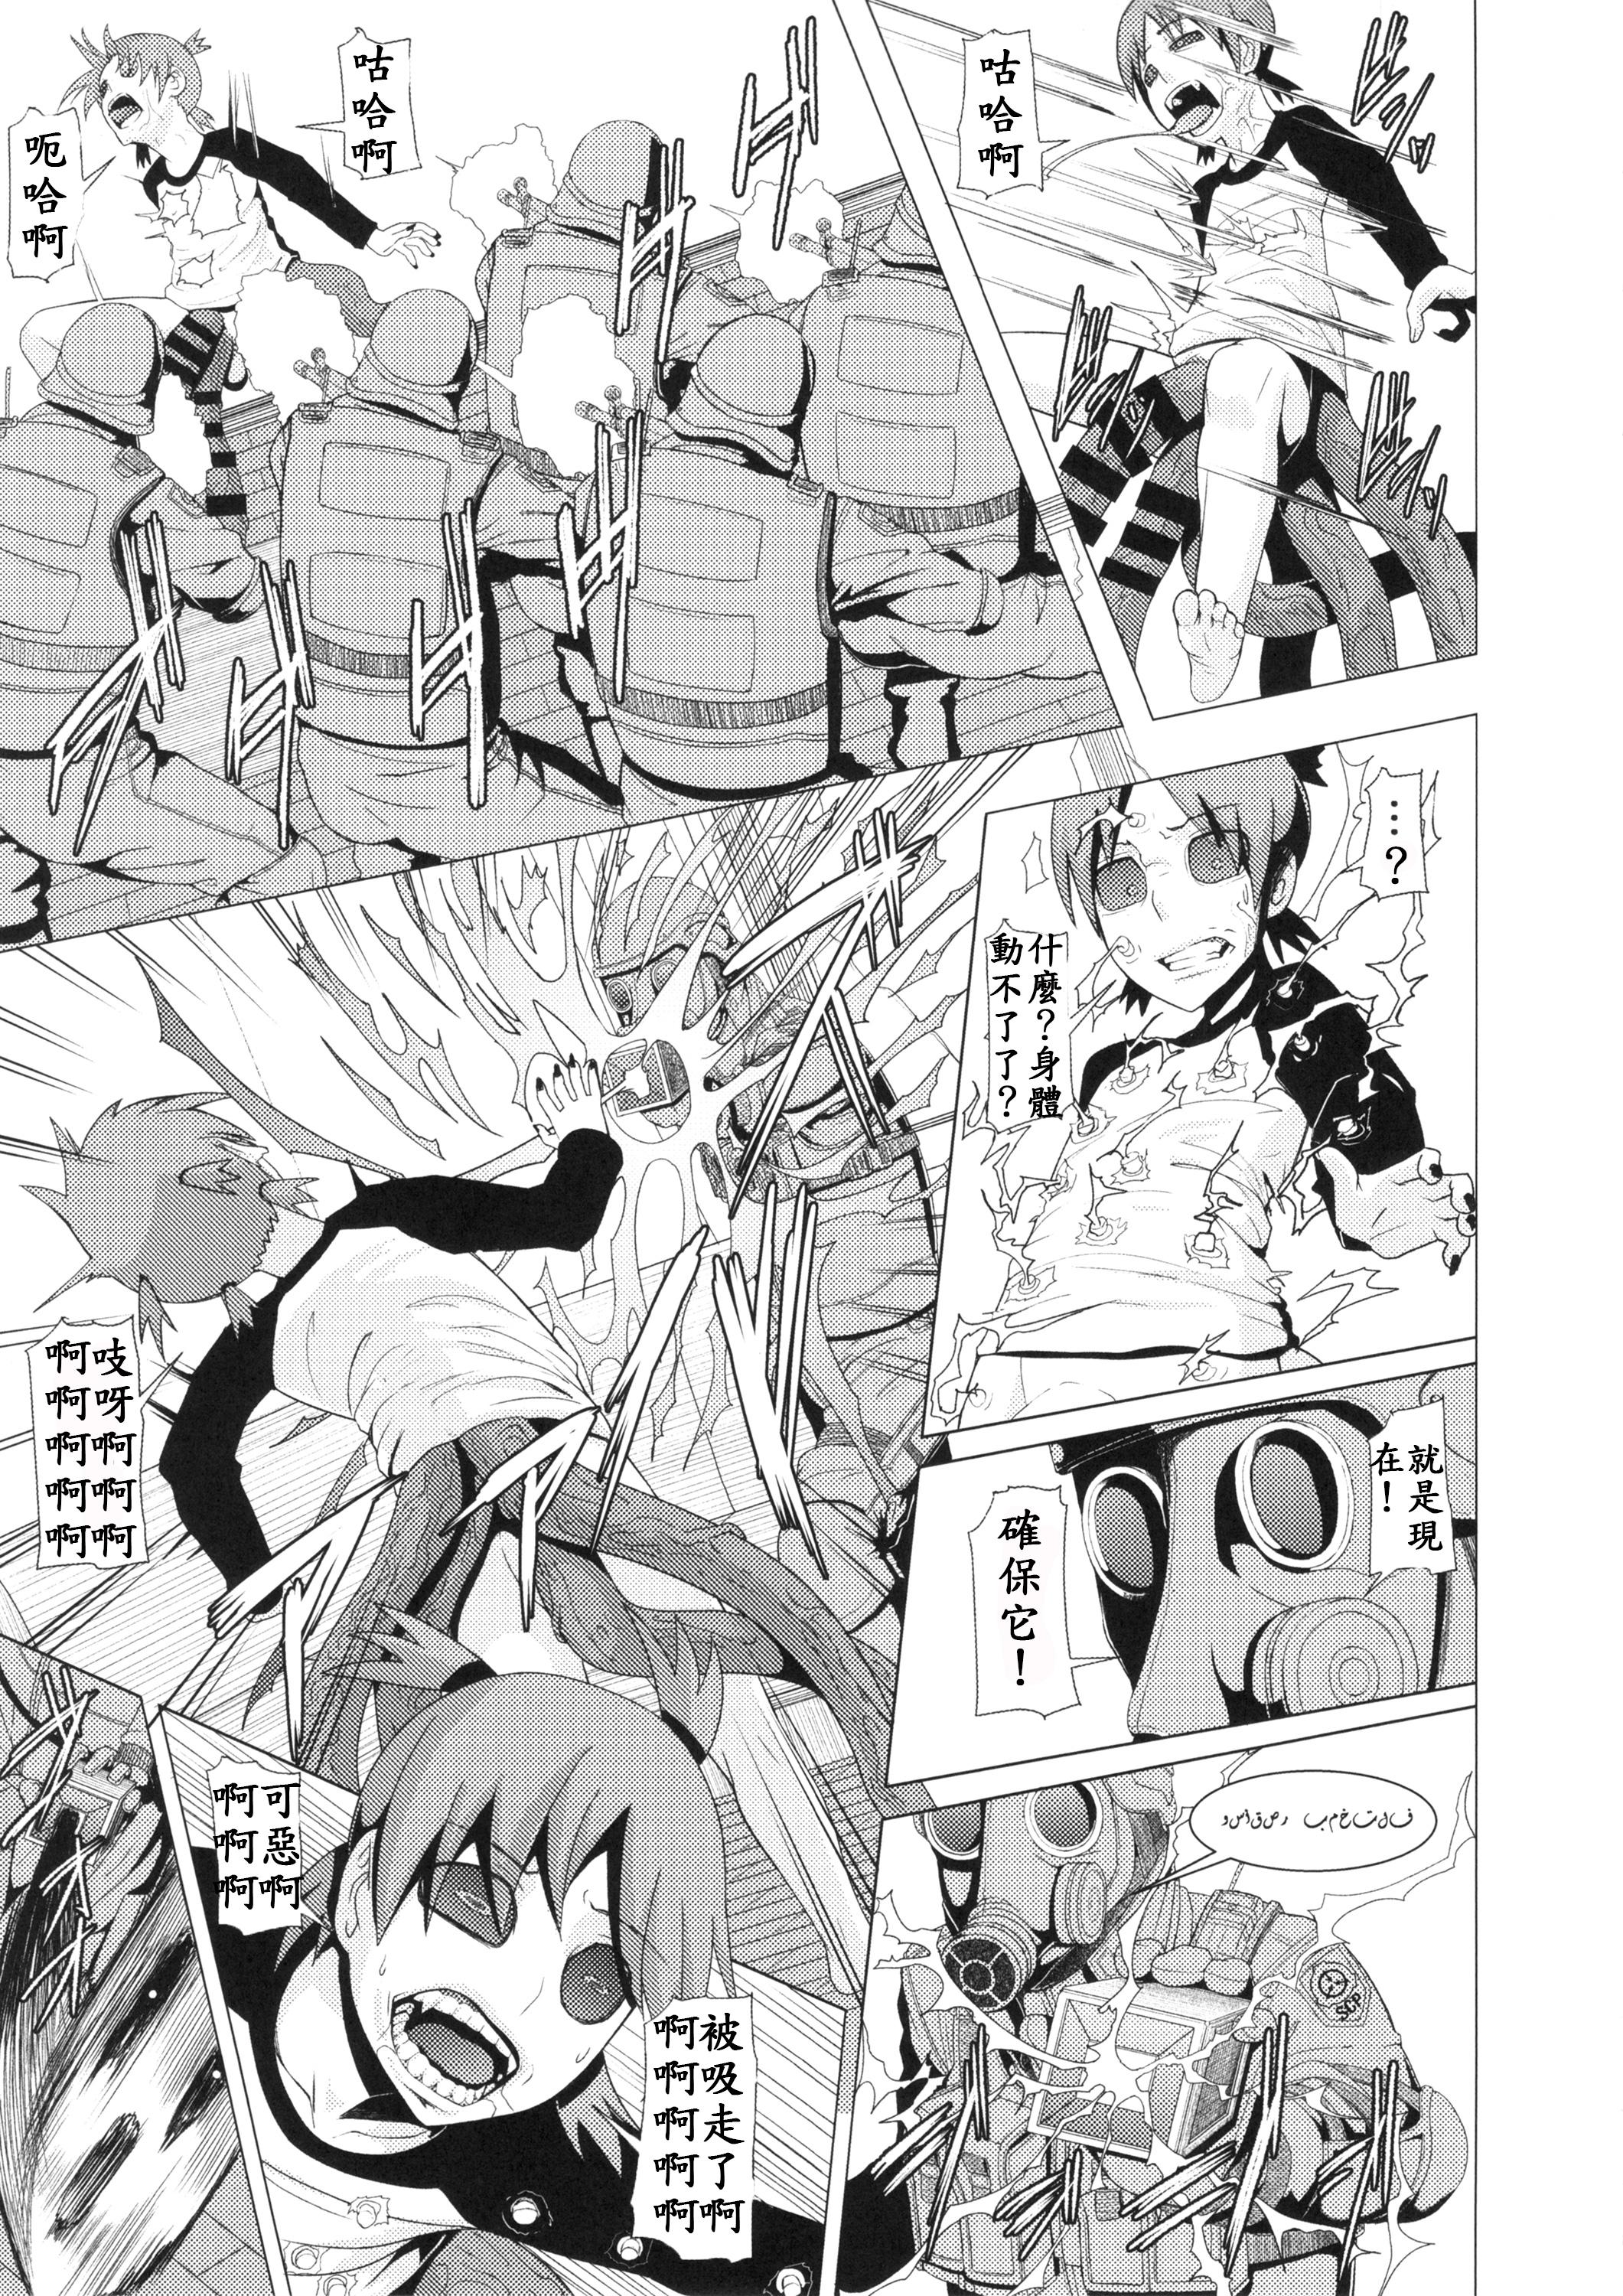 This REDLEVEL14 - Yotsubato 19yo - Page 29